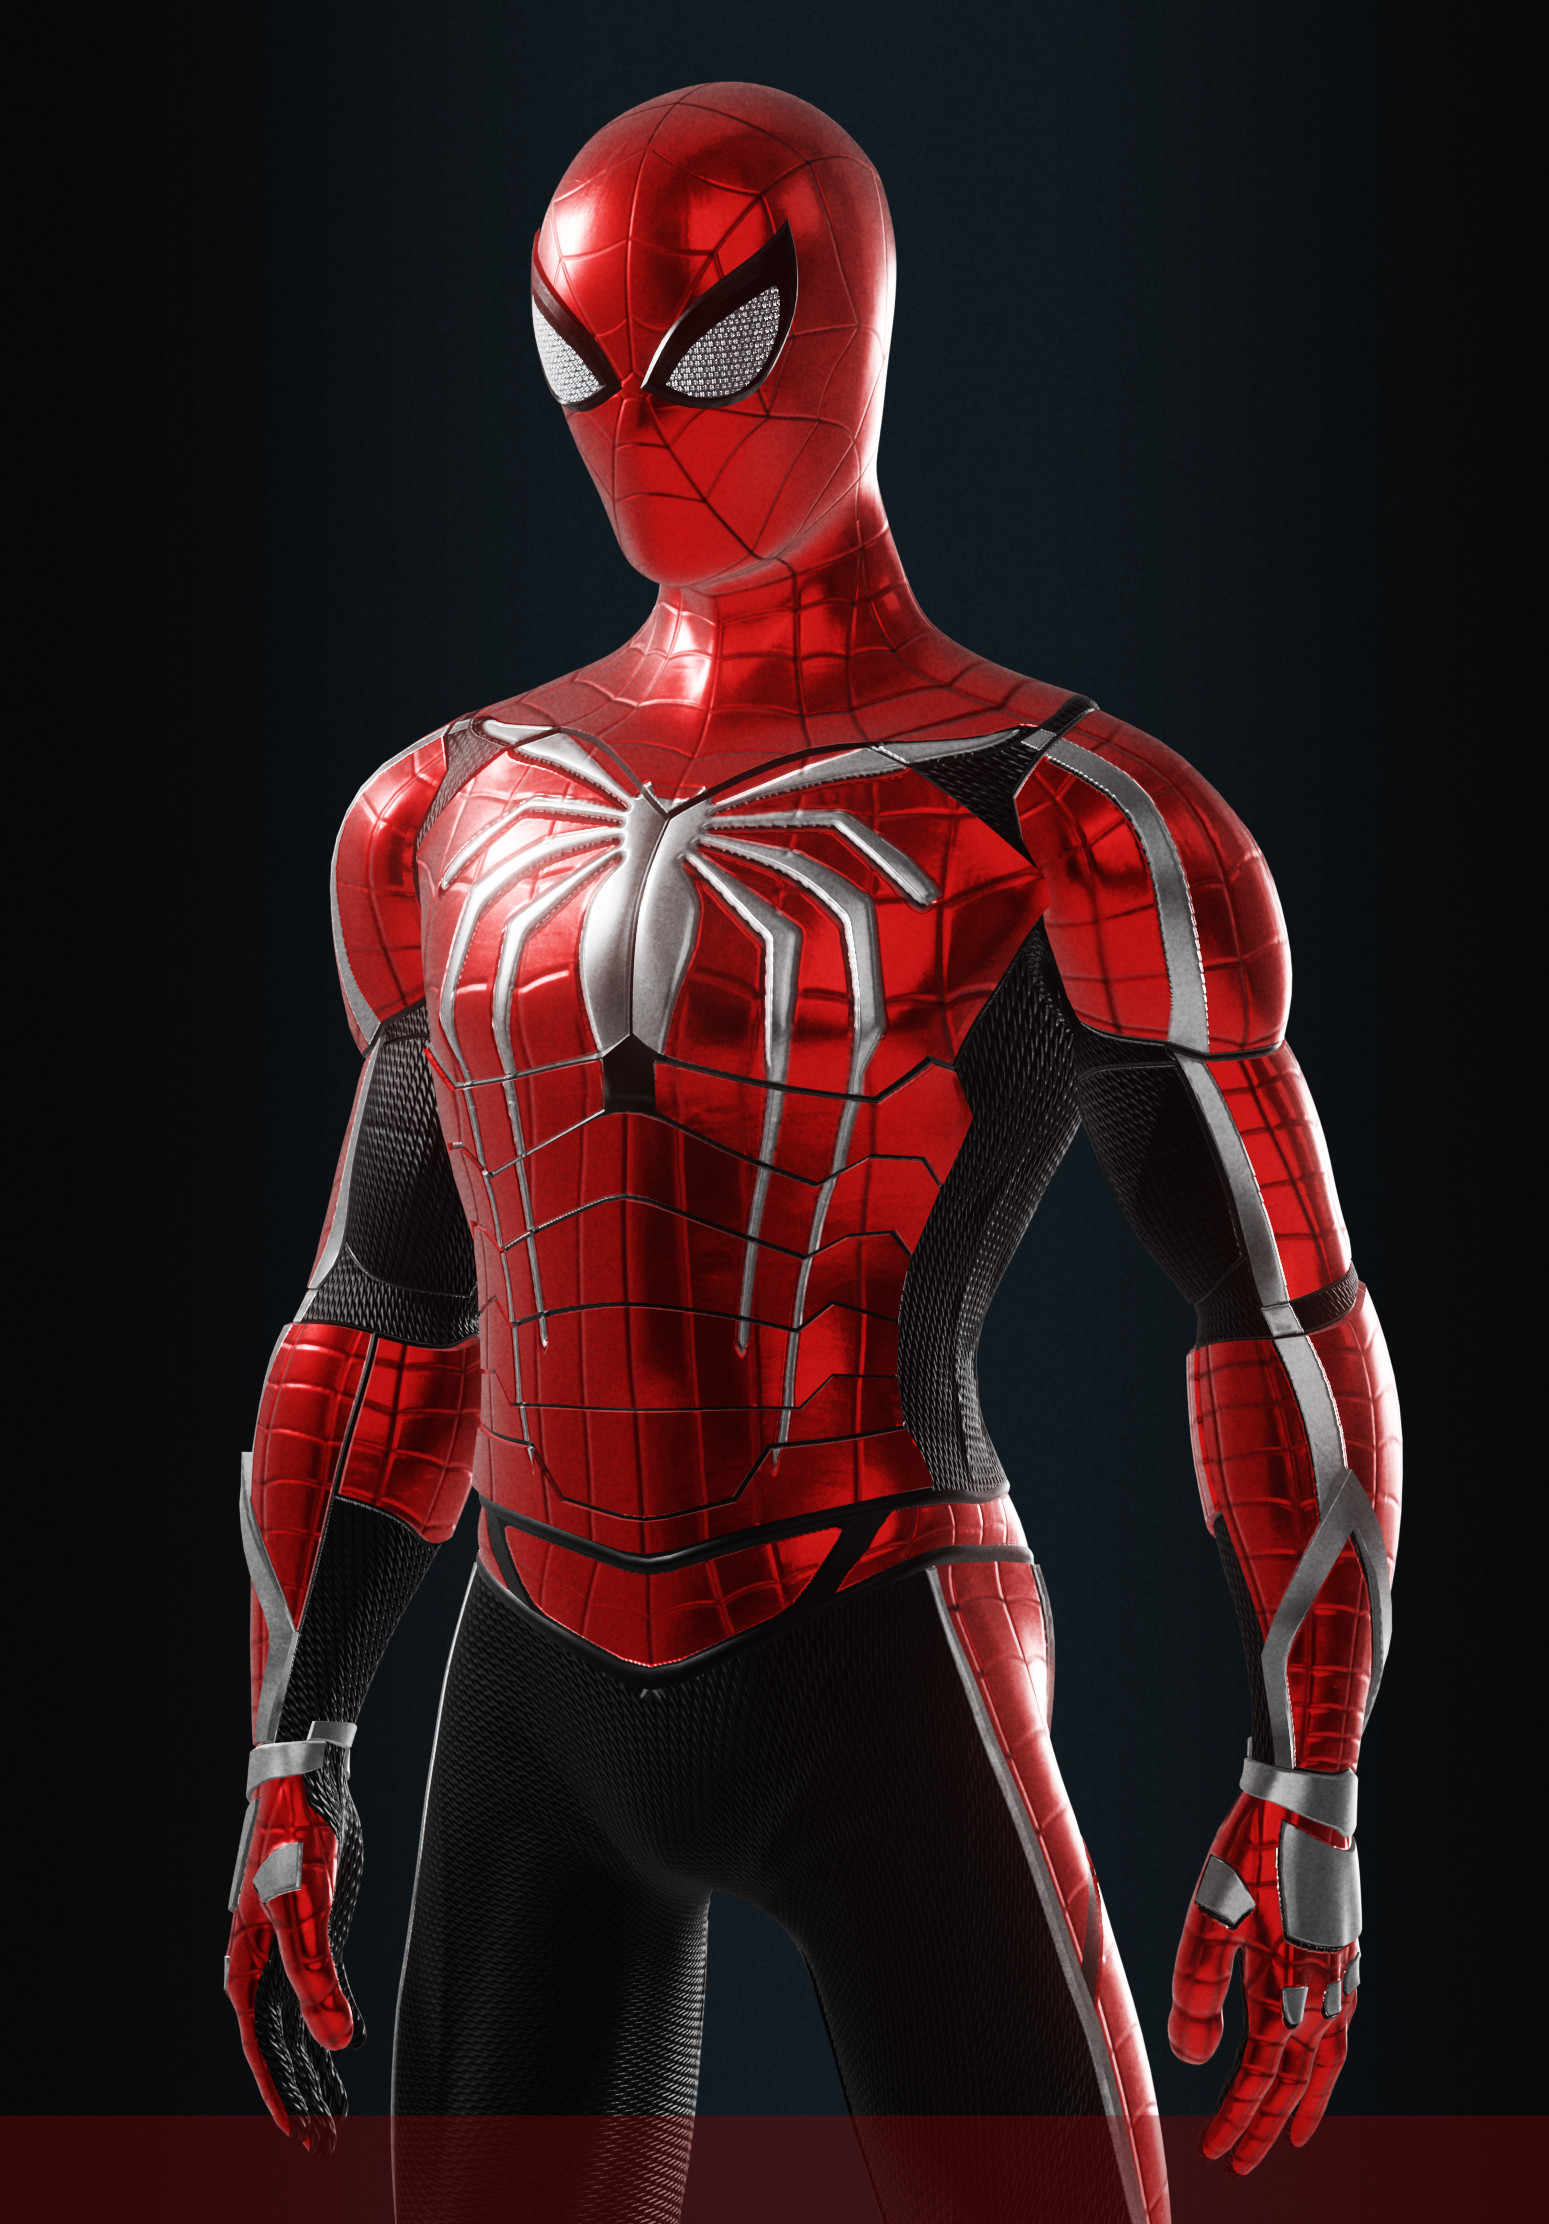 ArtStation - Spiderman Custom Suit design - 3D character asset